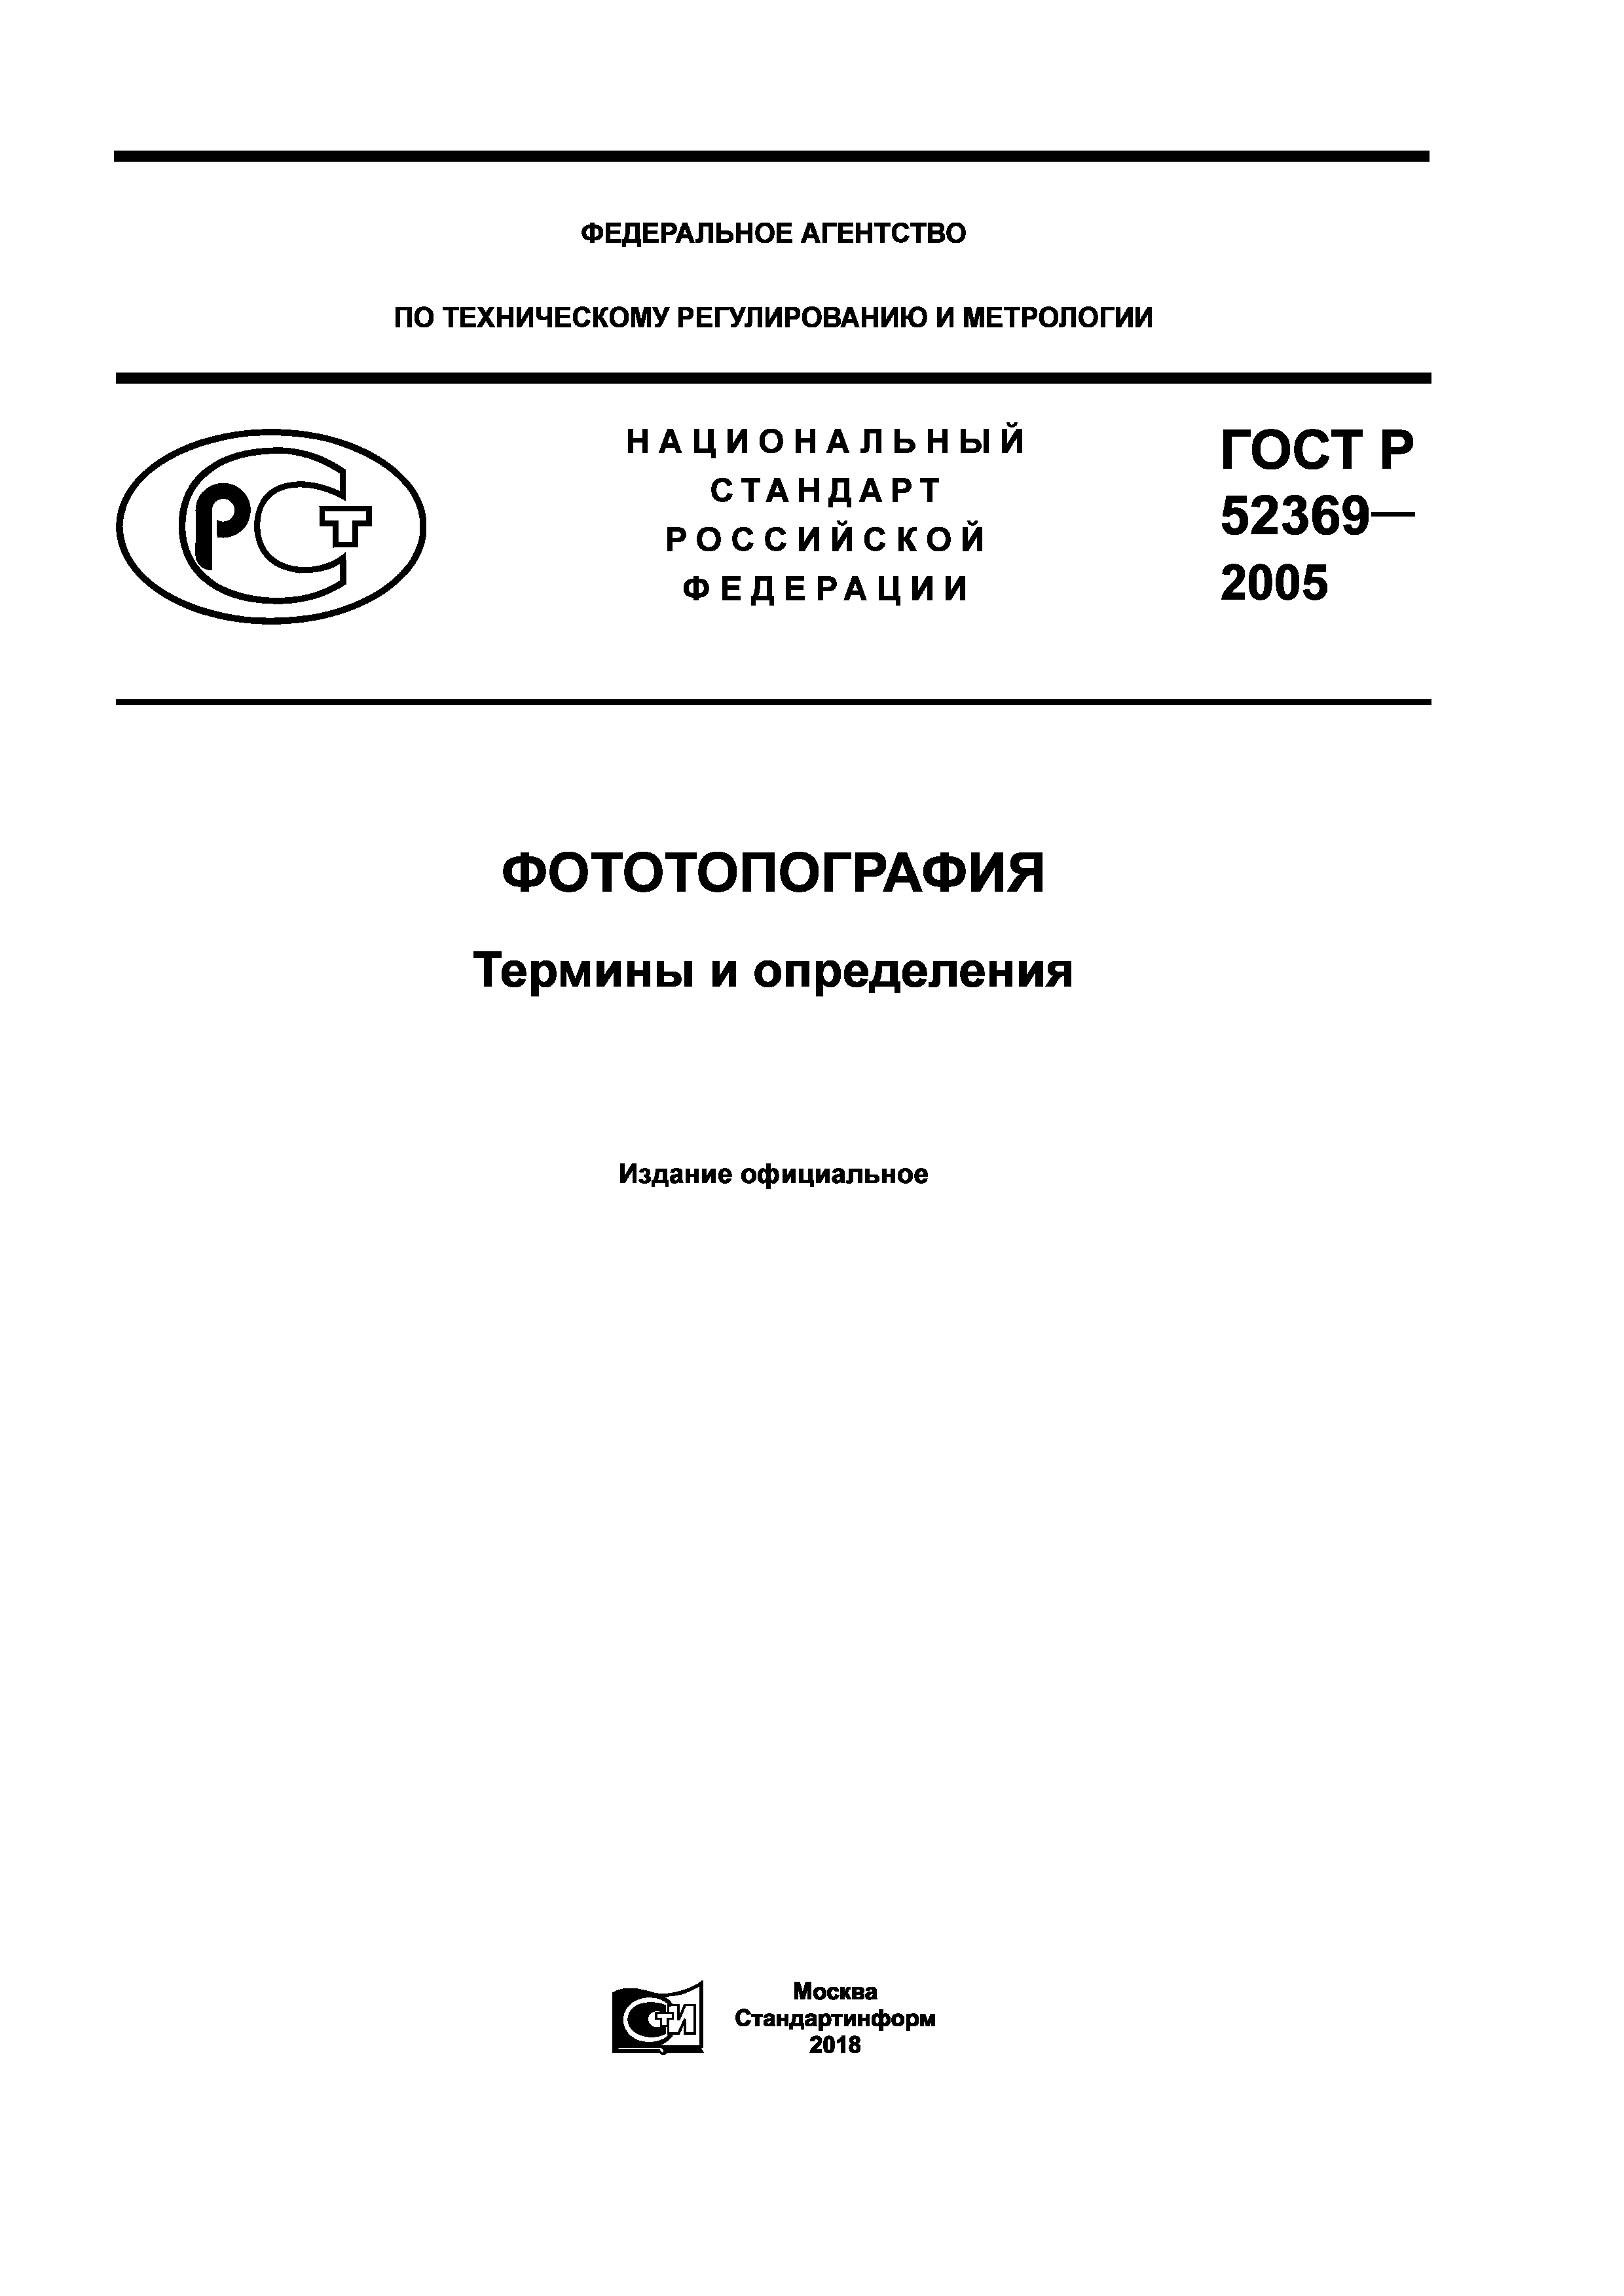 ГОСТ Р 52369-2005